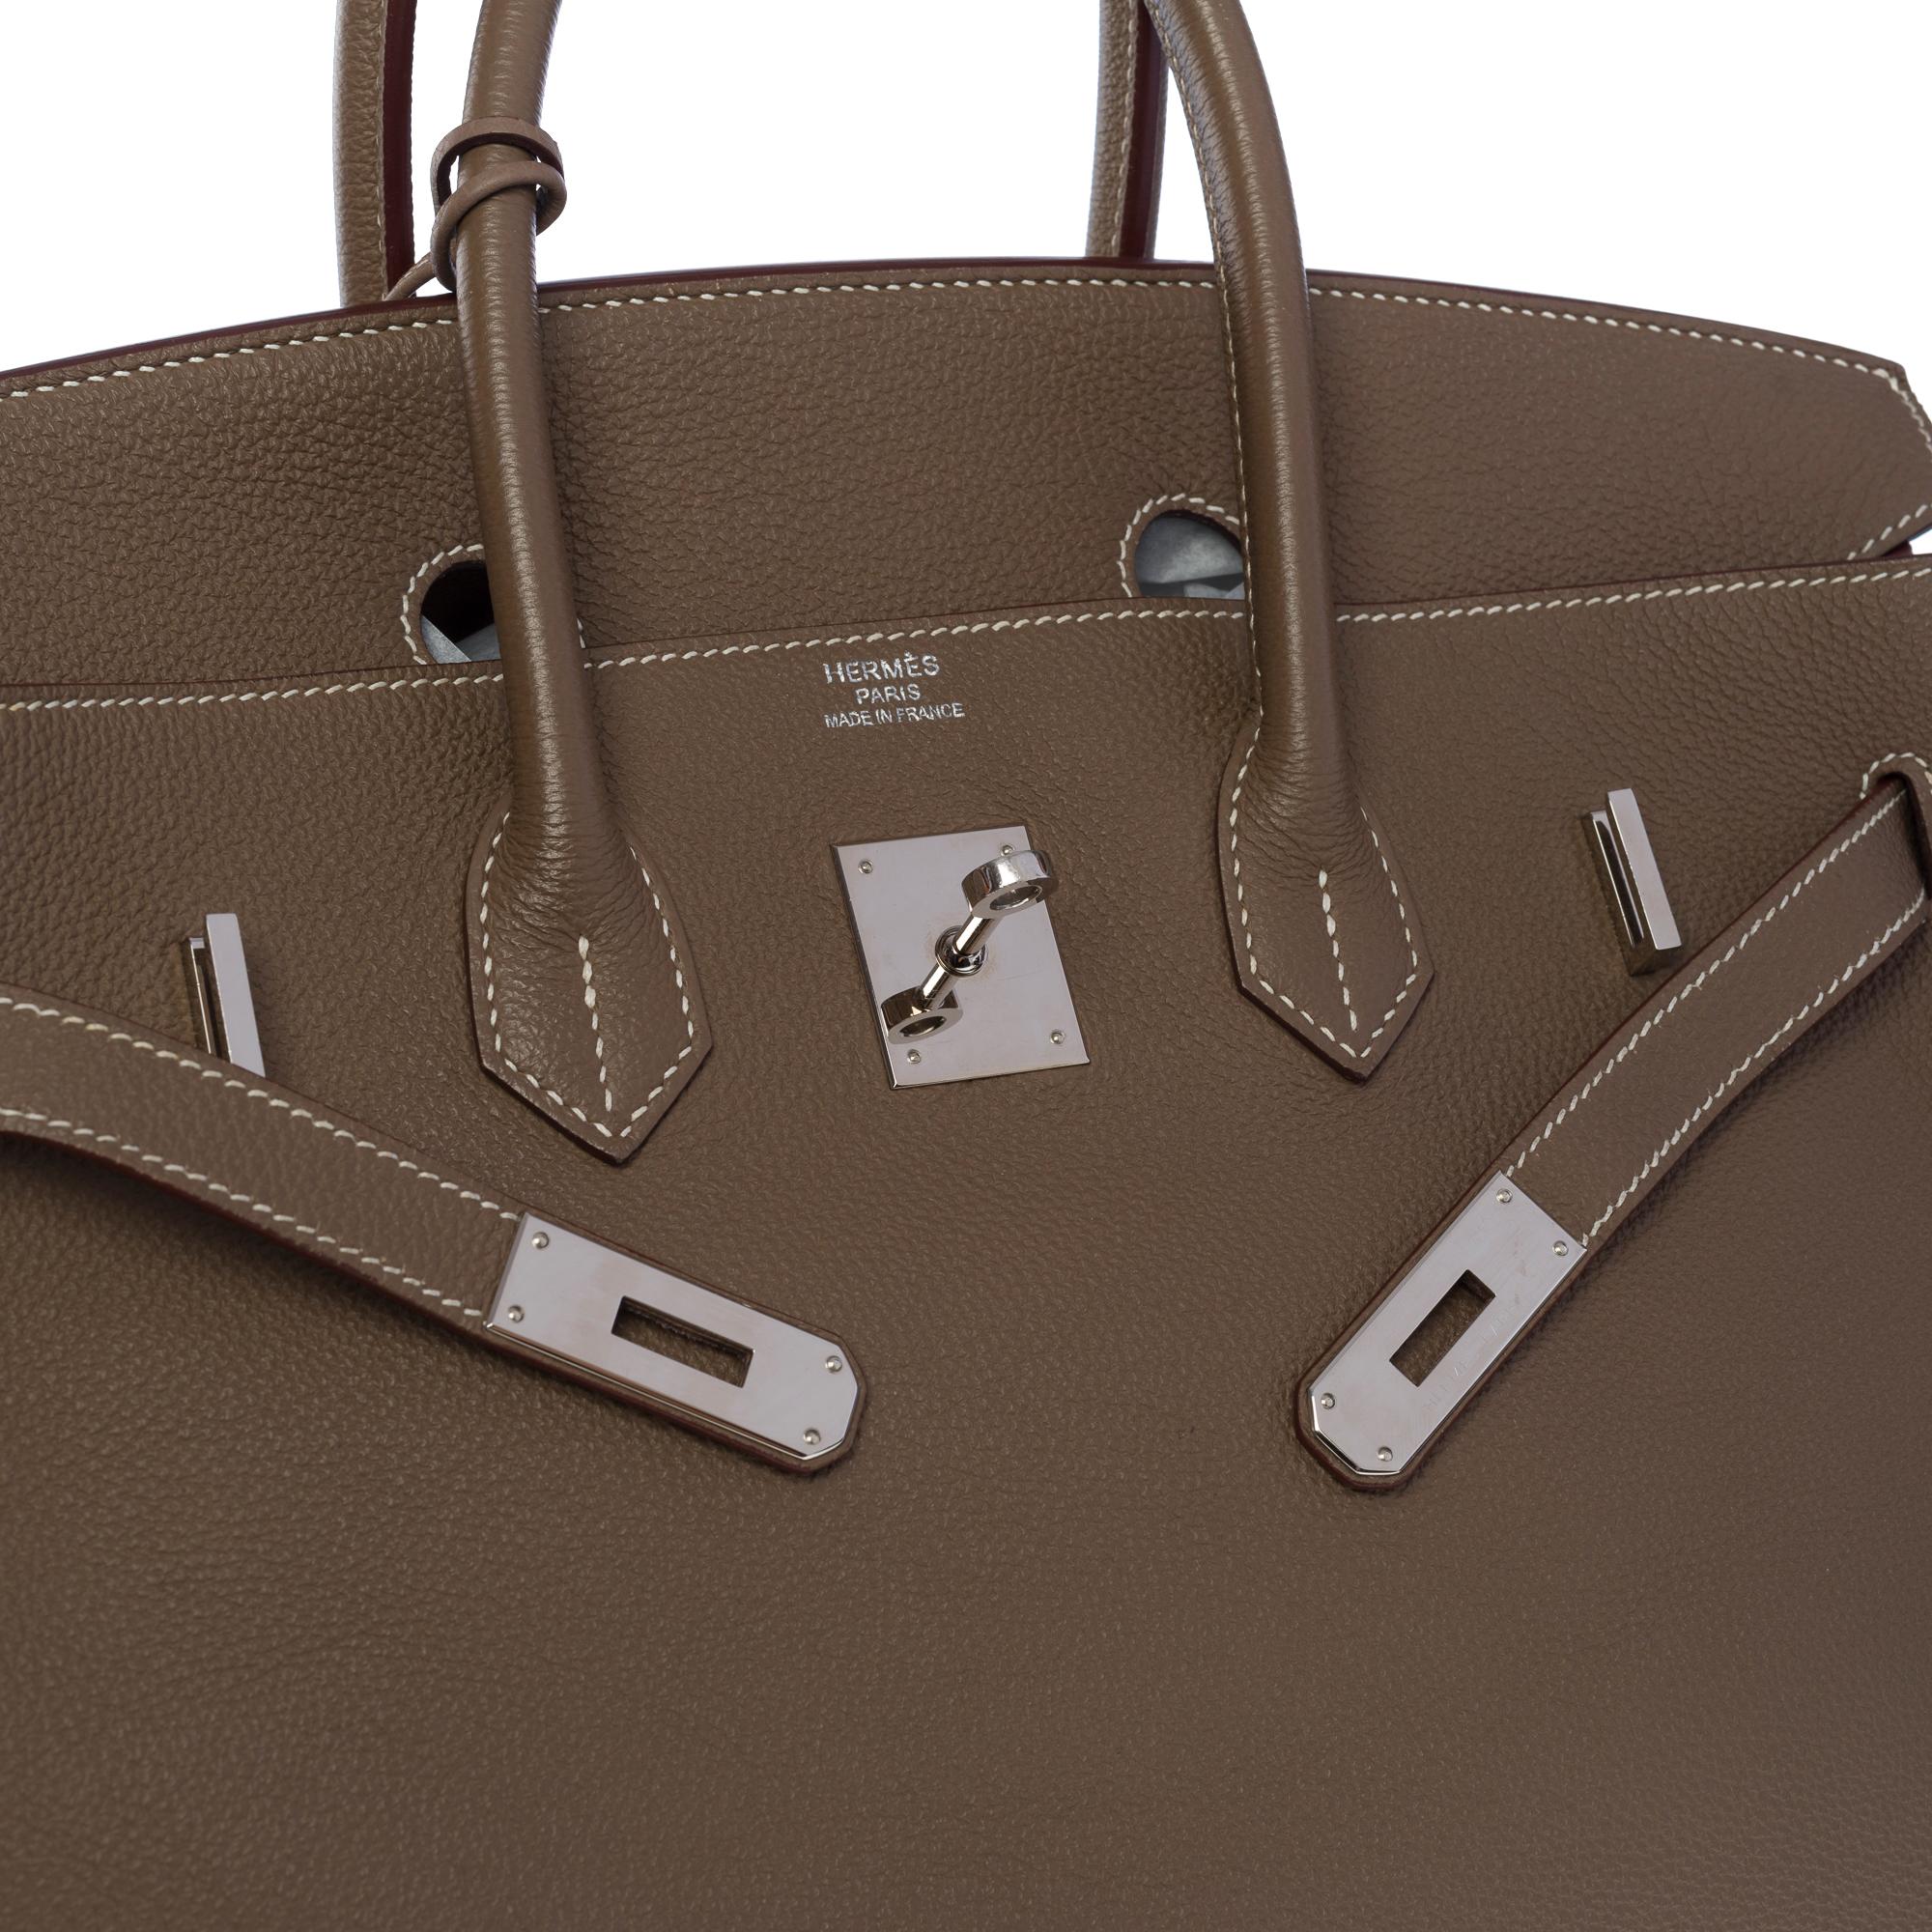 Stunning Hermès Birkin 35 handbag in etoupe Togo leather, SHW 1